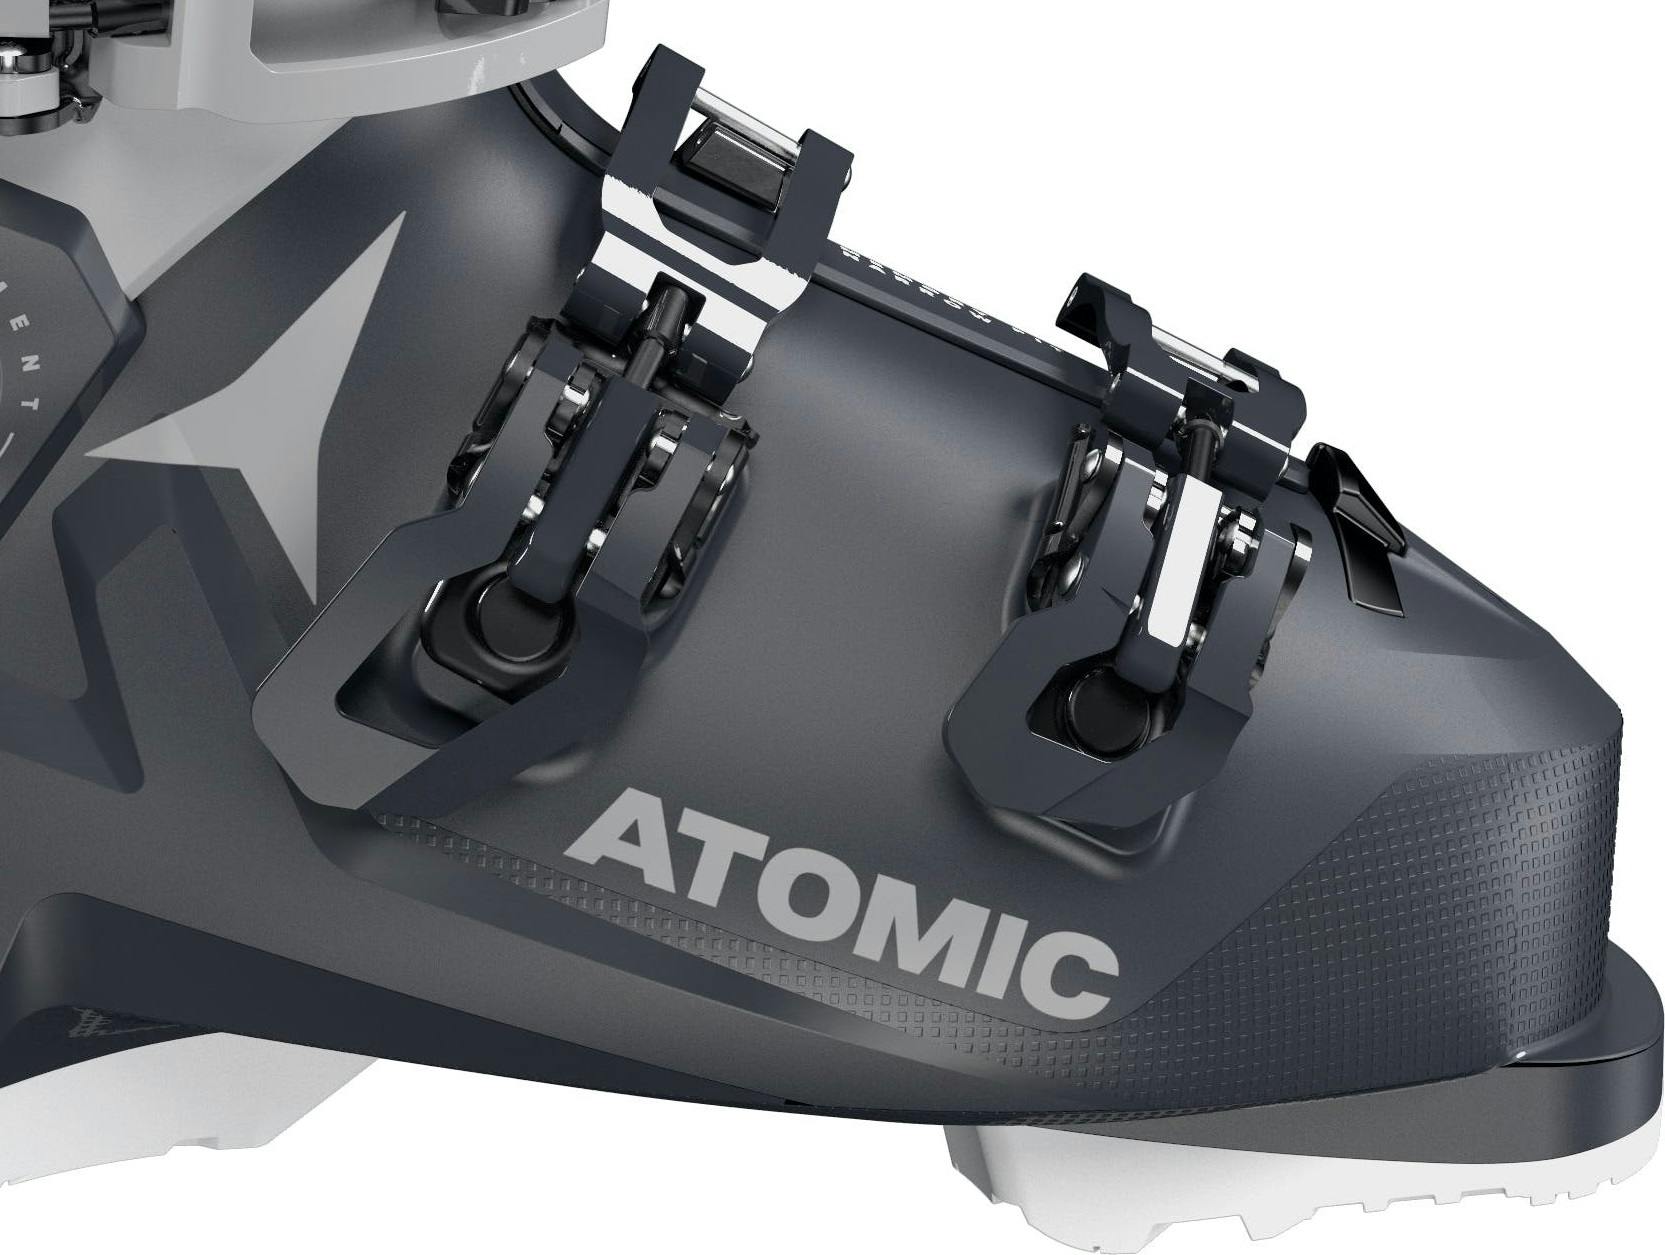 Atomic Hawx Ultra 95 S W GW Ski Boots · Women's · 2023 · 25/25.5 · Grey Blue/Light Grey/White